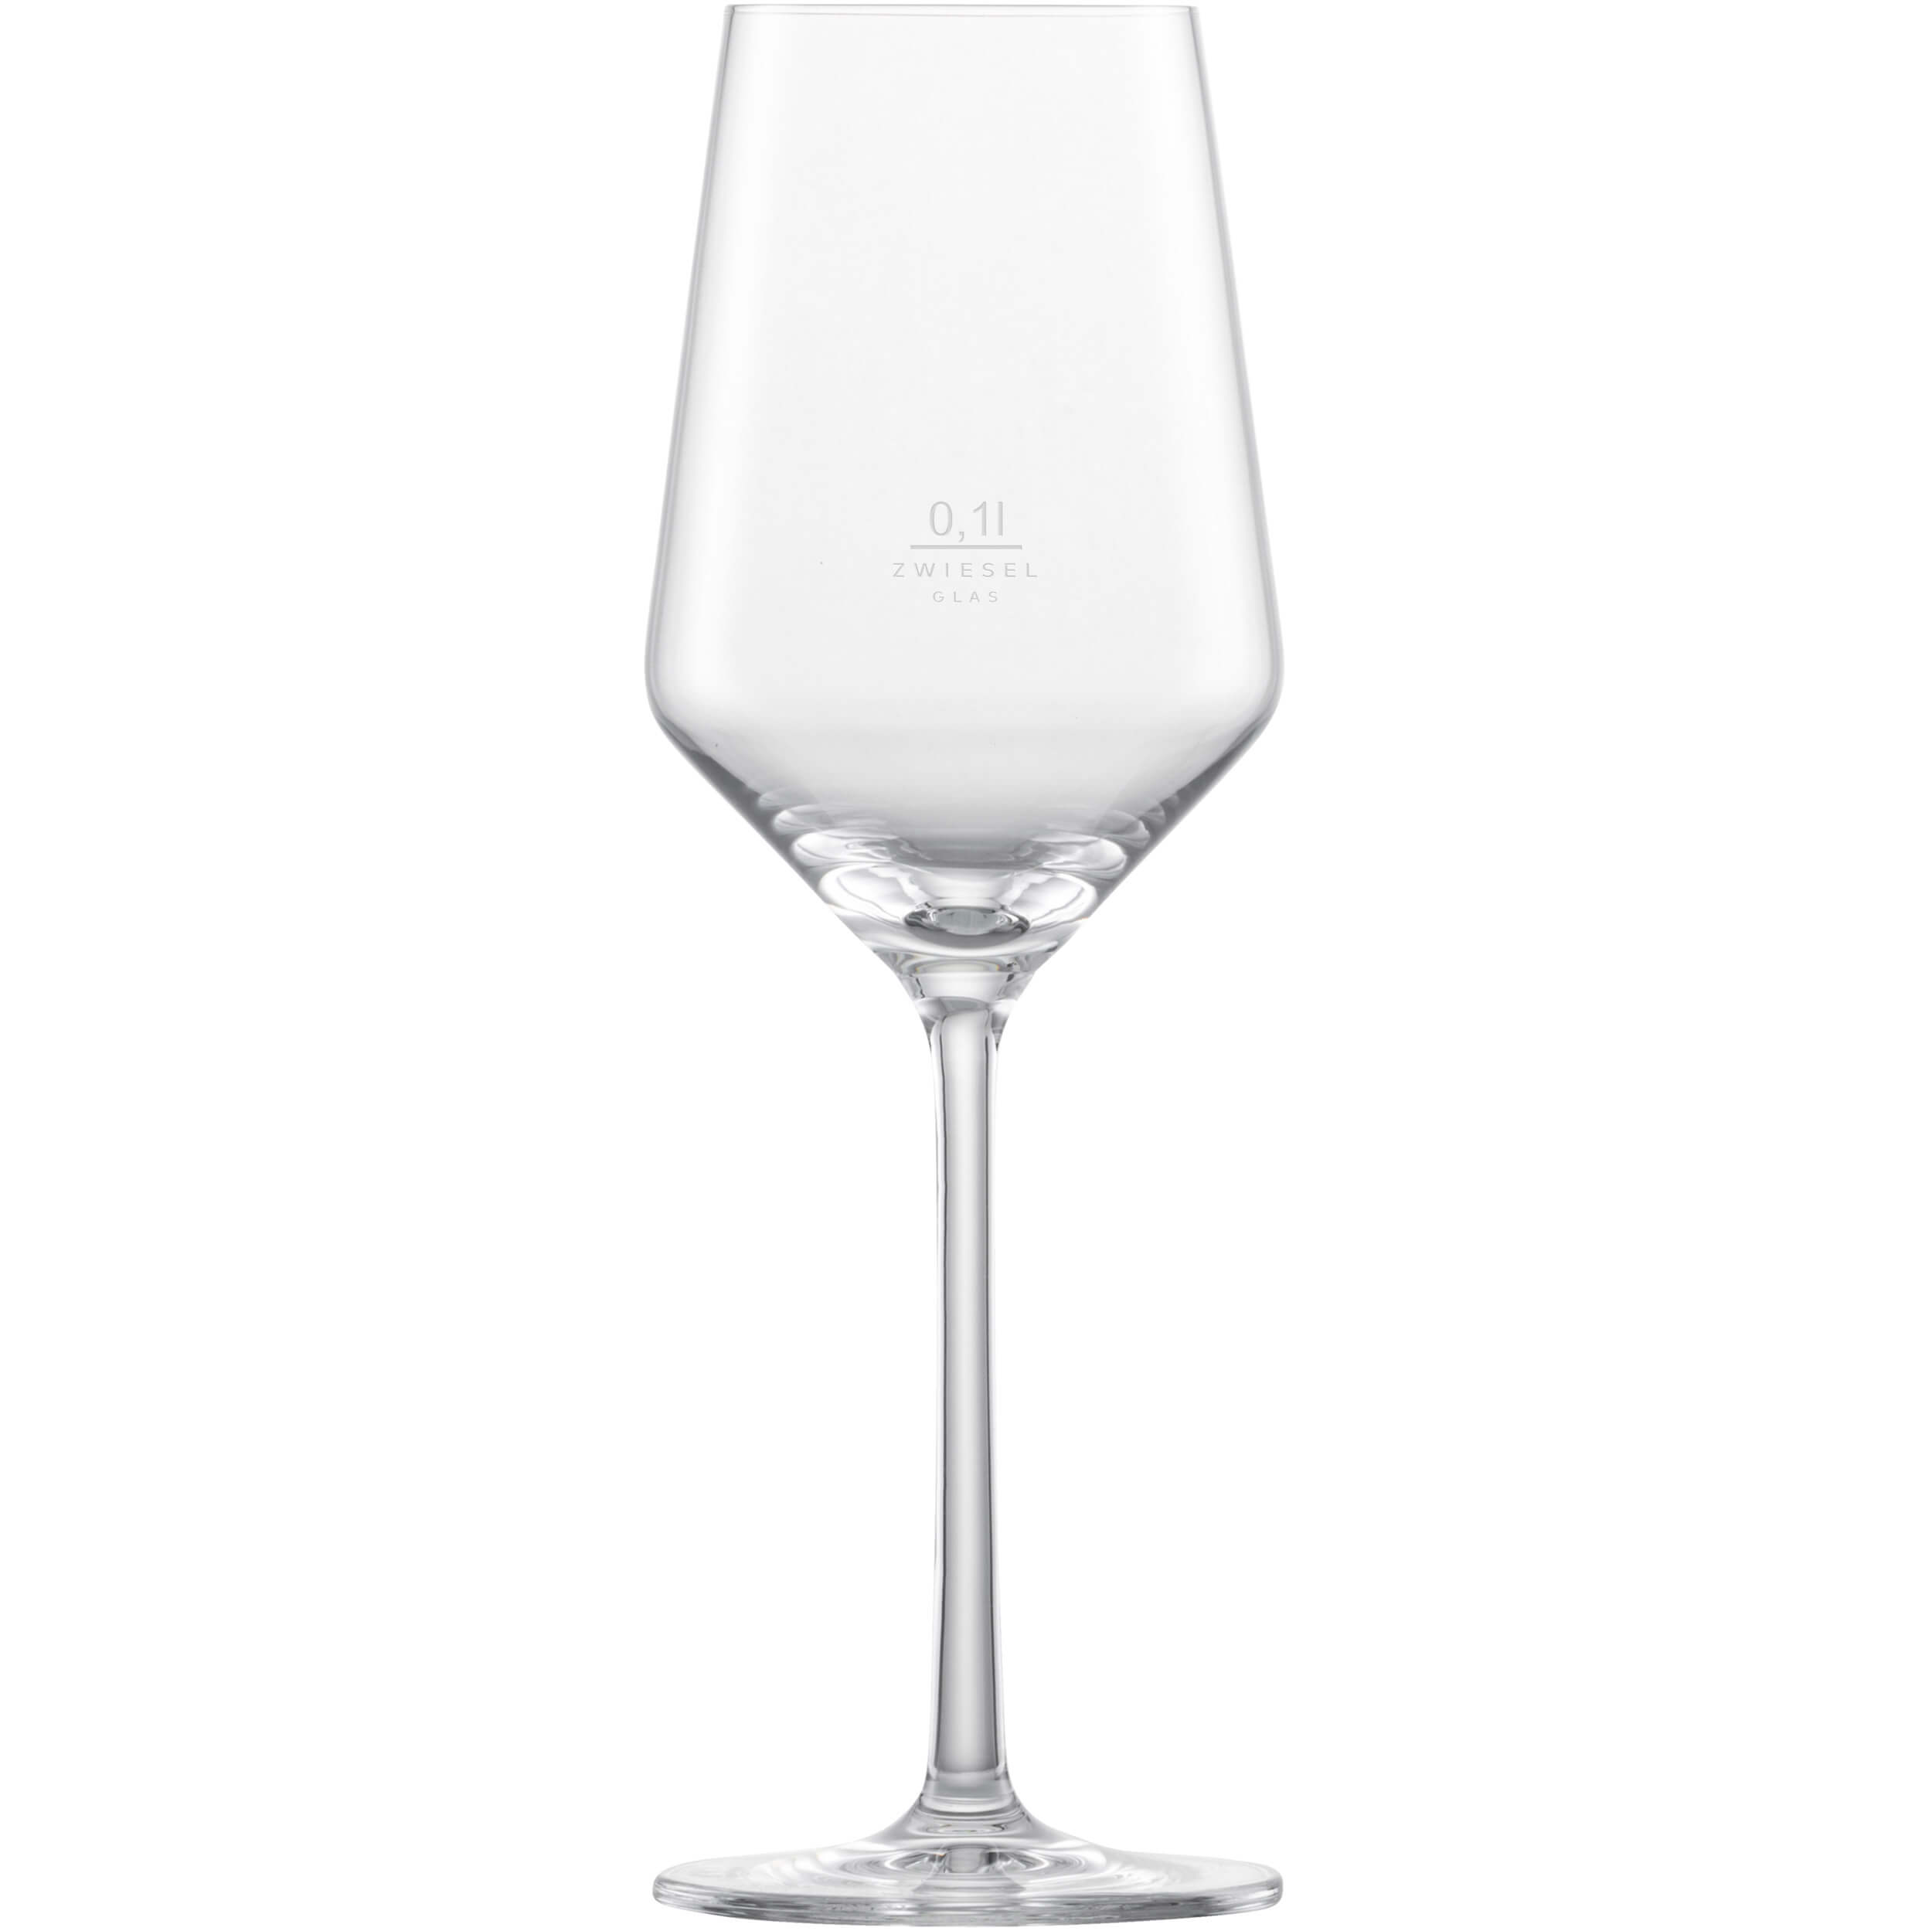 White wine glass Riesling Belfesta, Zwiesel Glas - 300ml, 0,1l CM (6 pcs.)